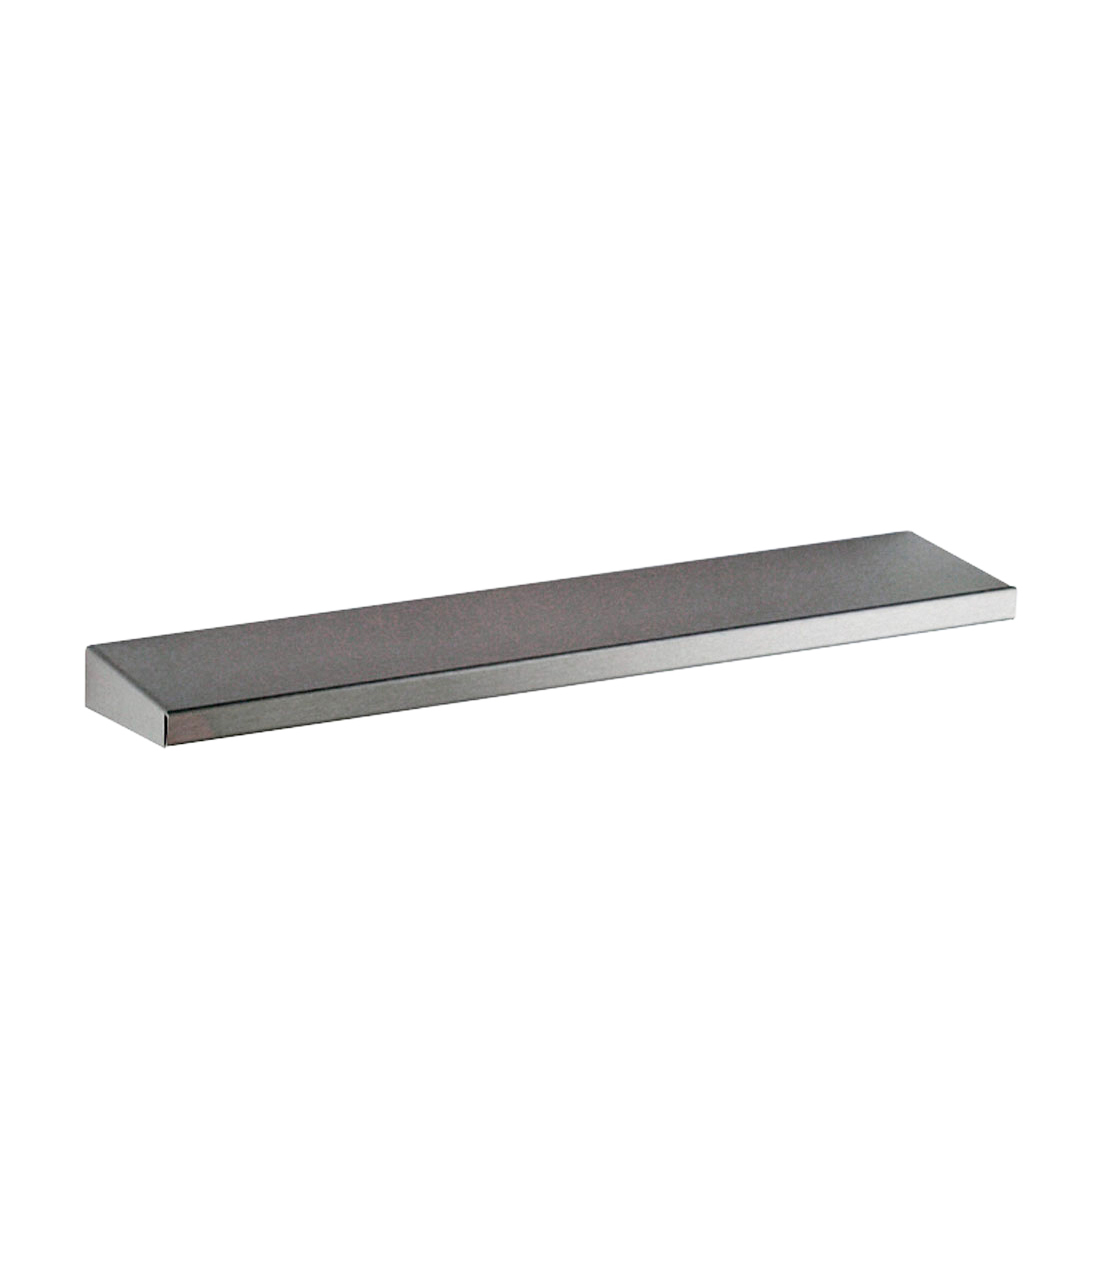 Stainless Steel Mirror Shelf - (Model #: ms-18) main image